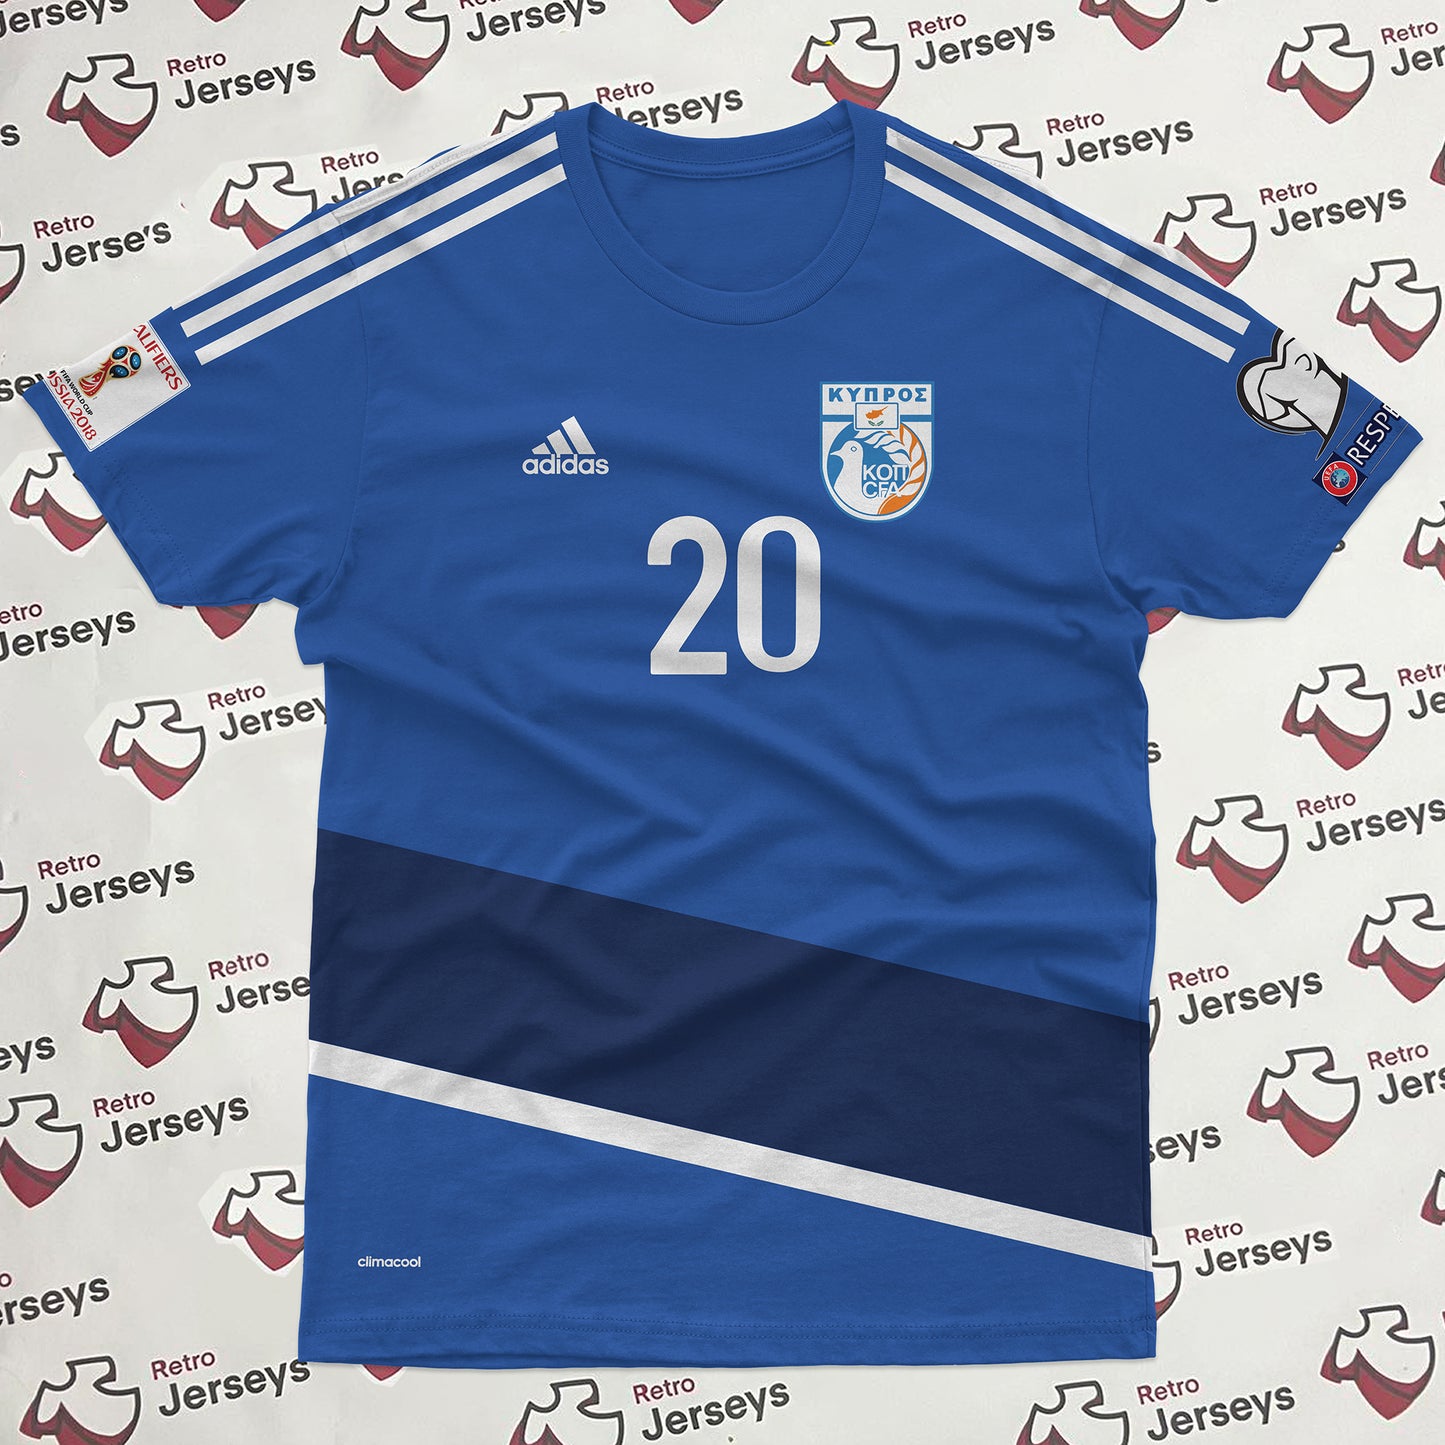 Cyprus 2016 Home & Away Kit - Retro Jerseys